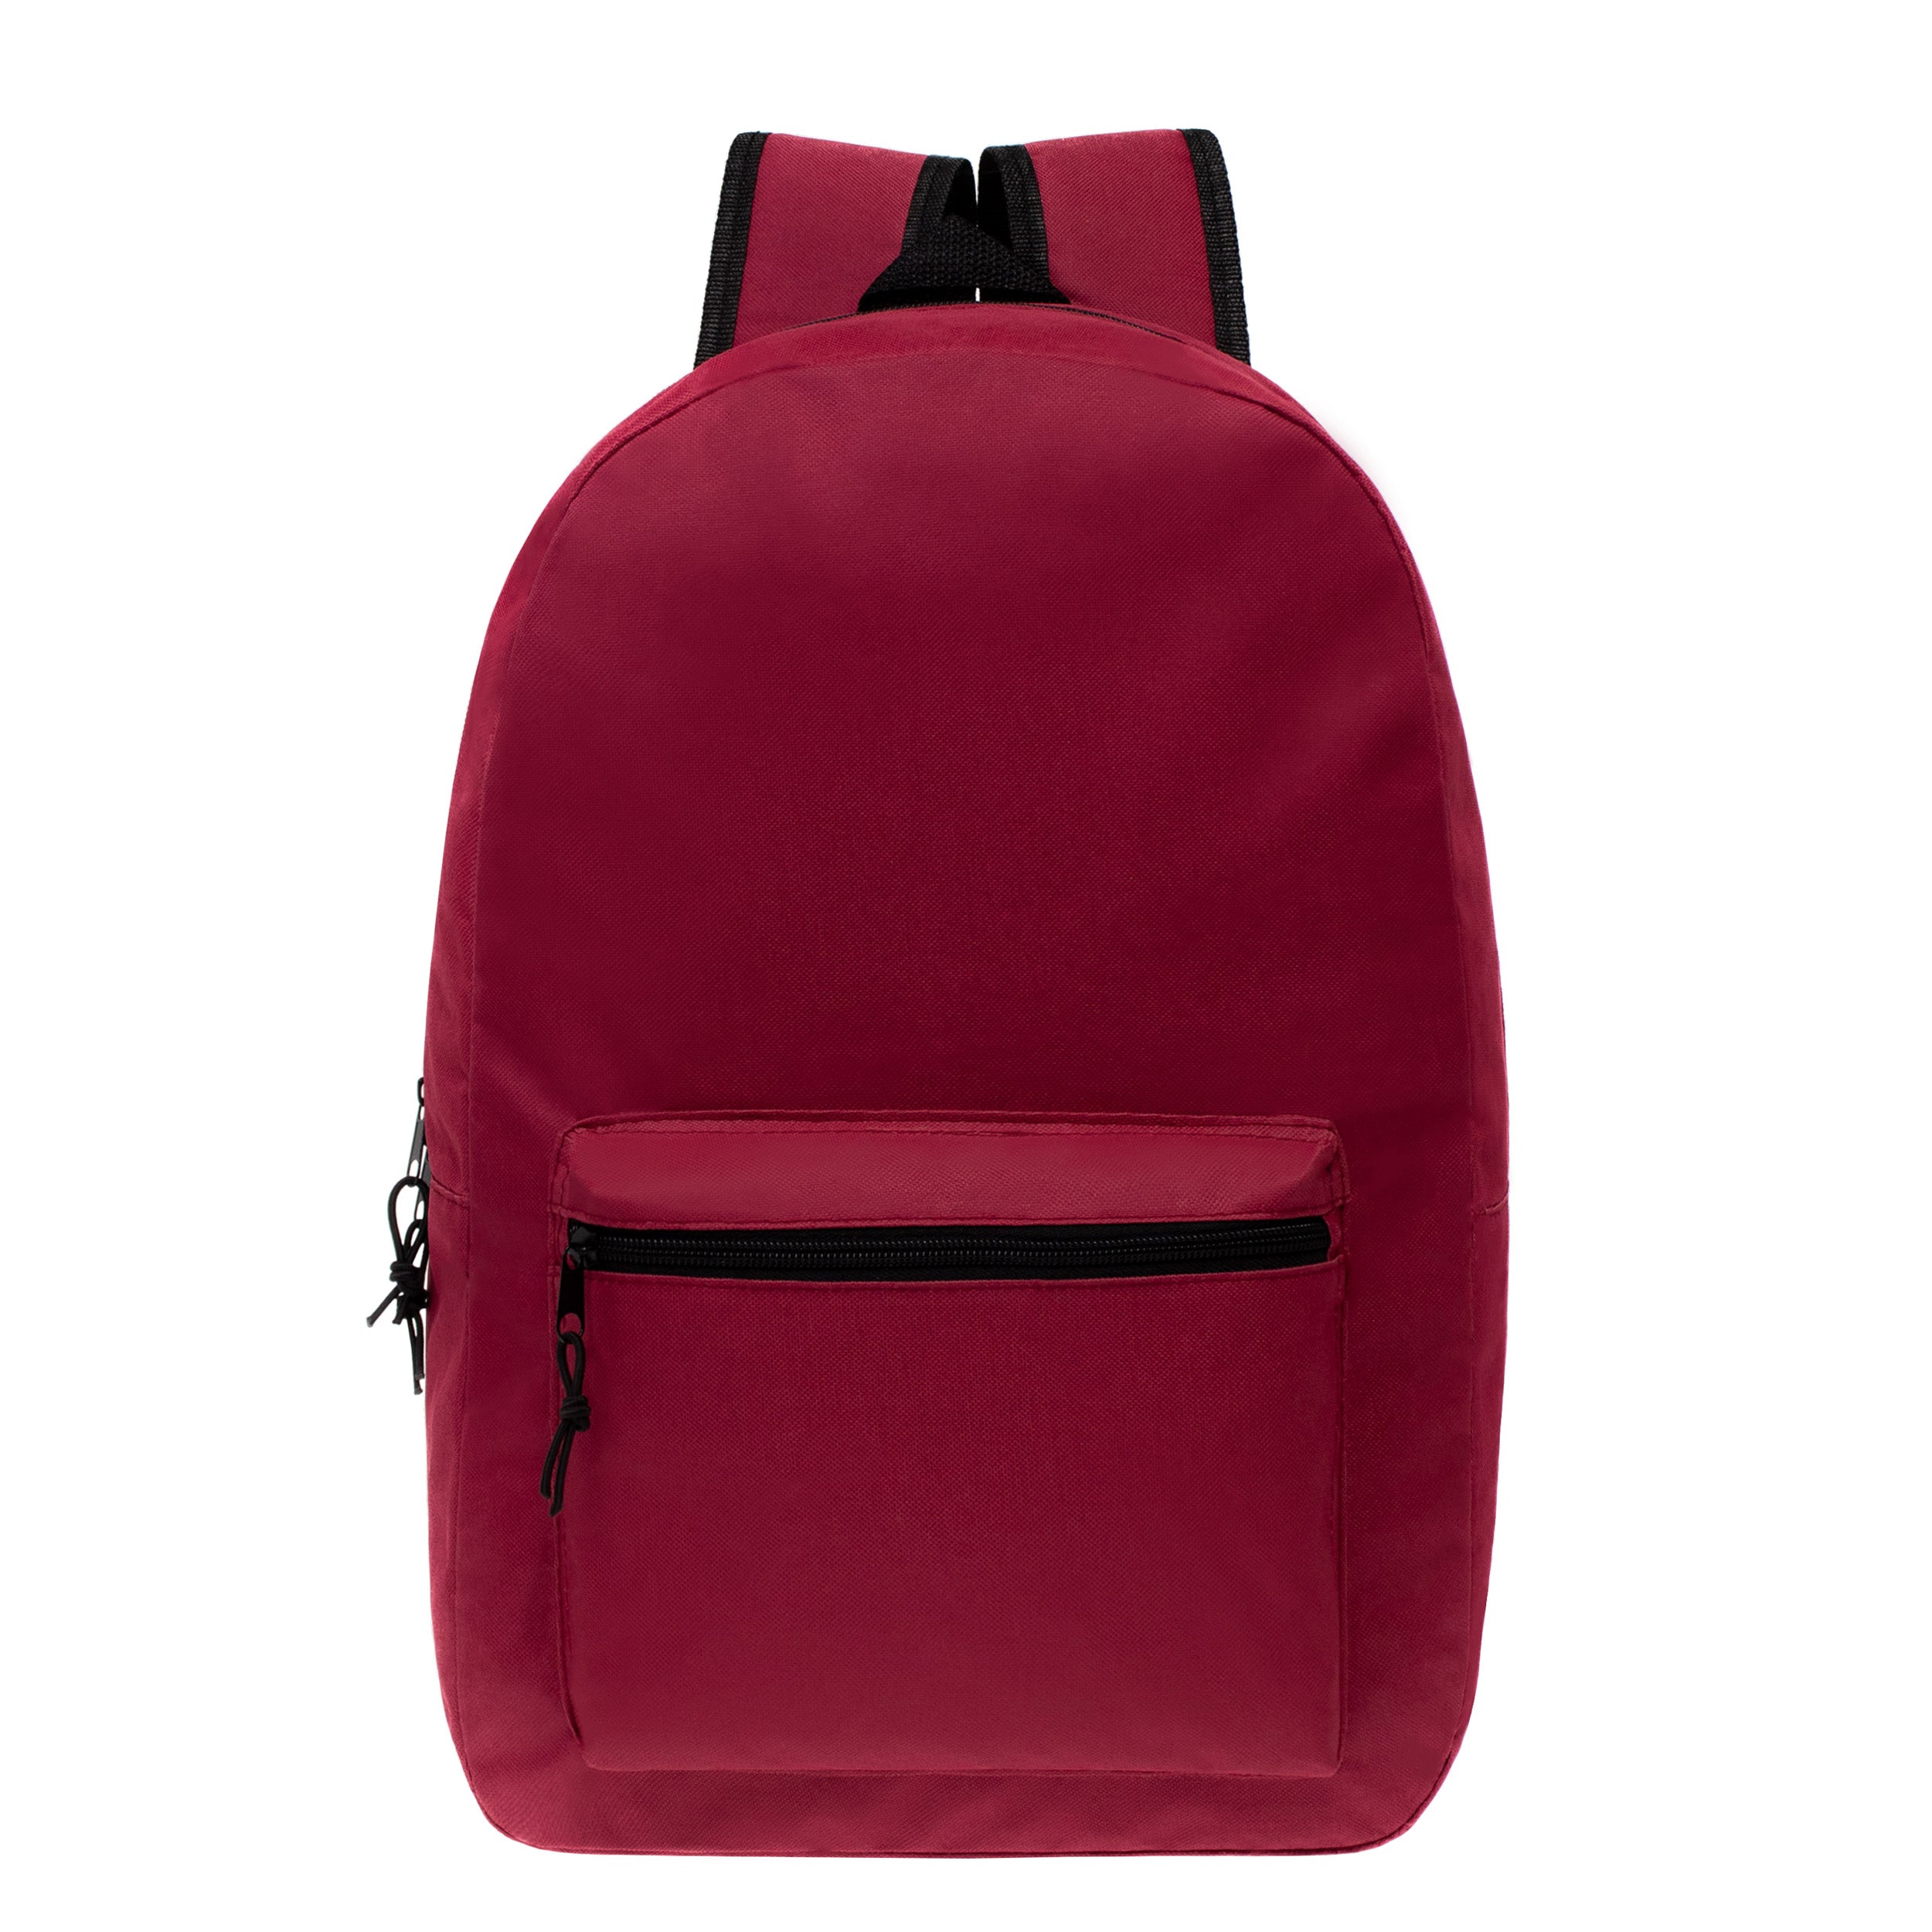 17" Kids Basic Wholesale Backpack in 8 Colors - Bulk Case of 24